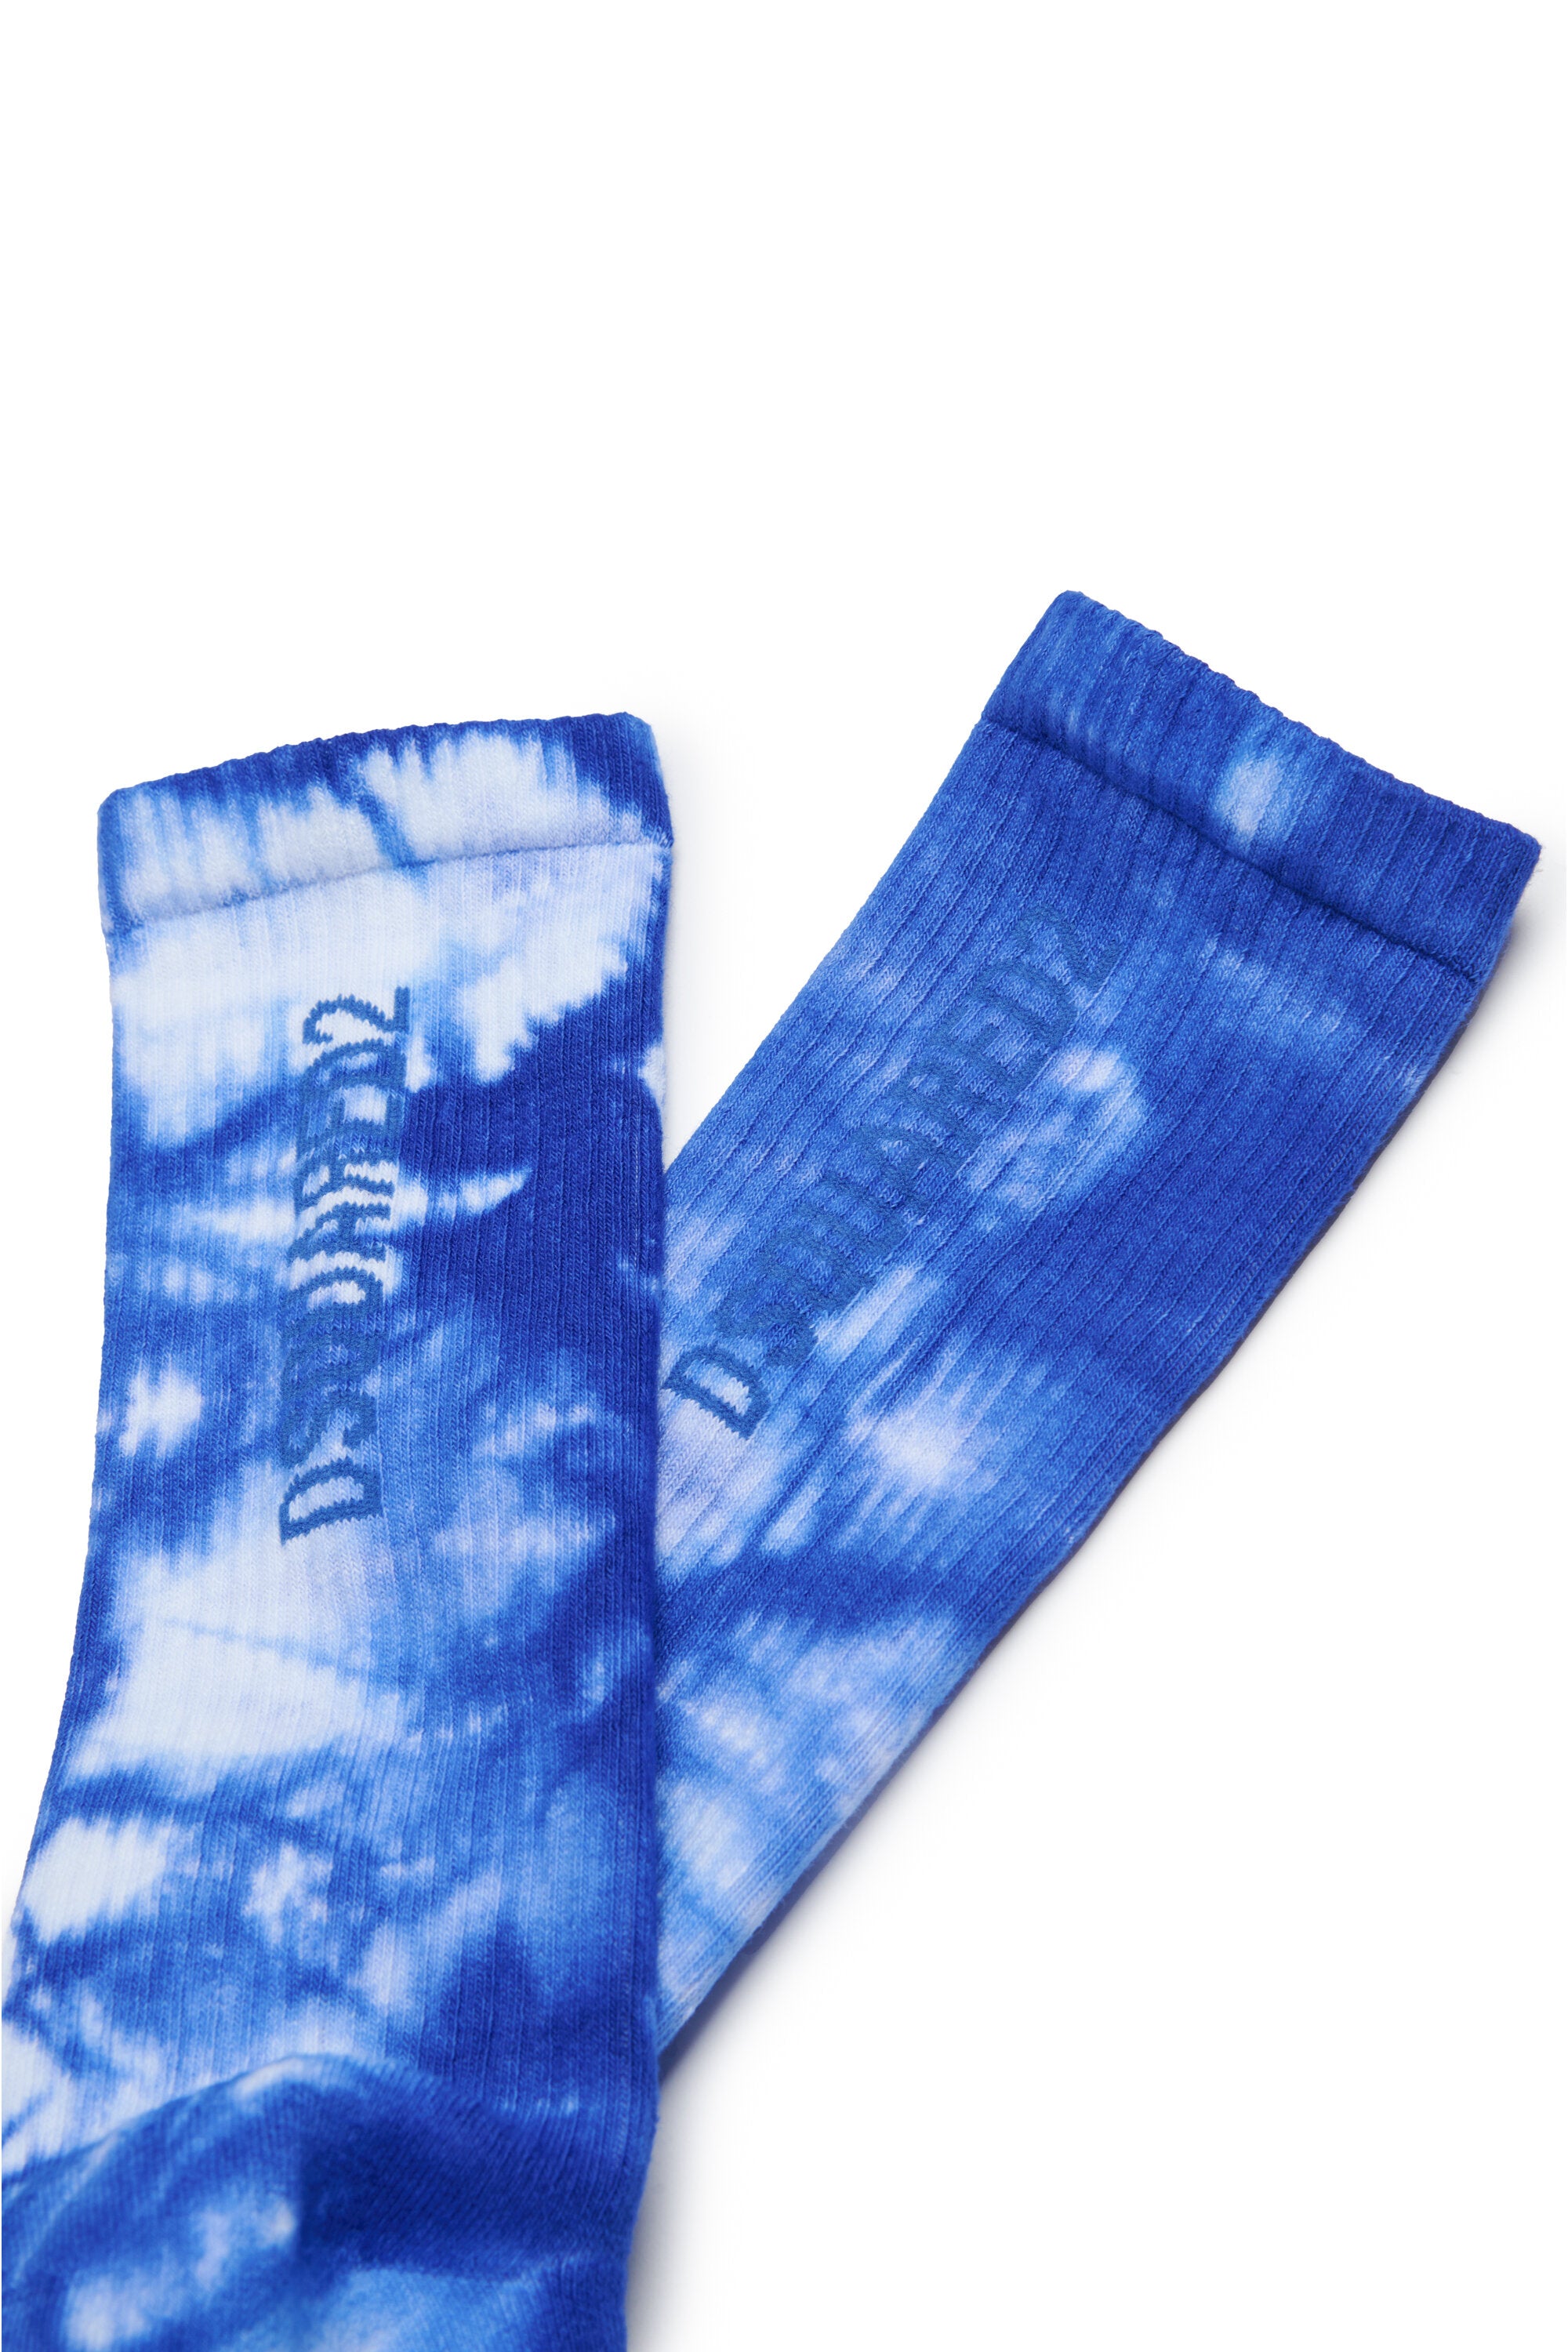 Cotton socks with tie-dye effect